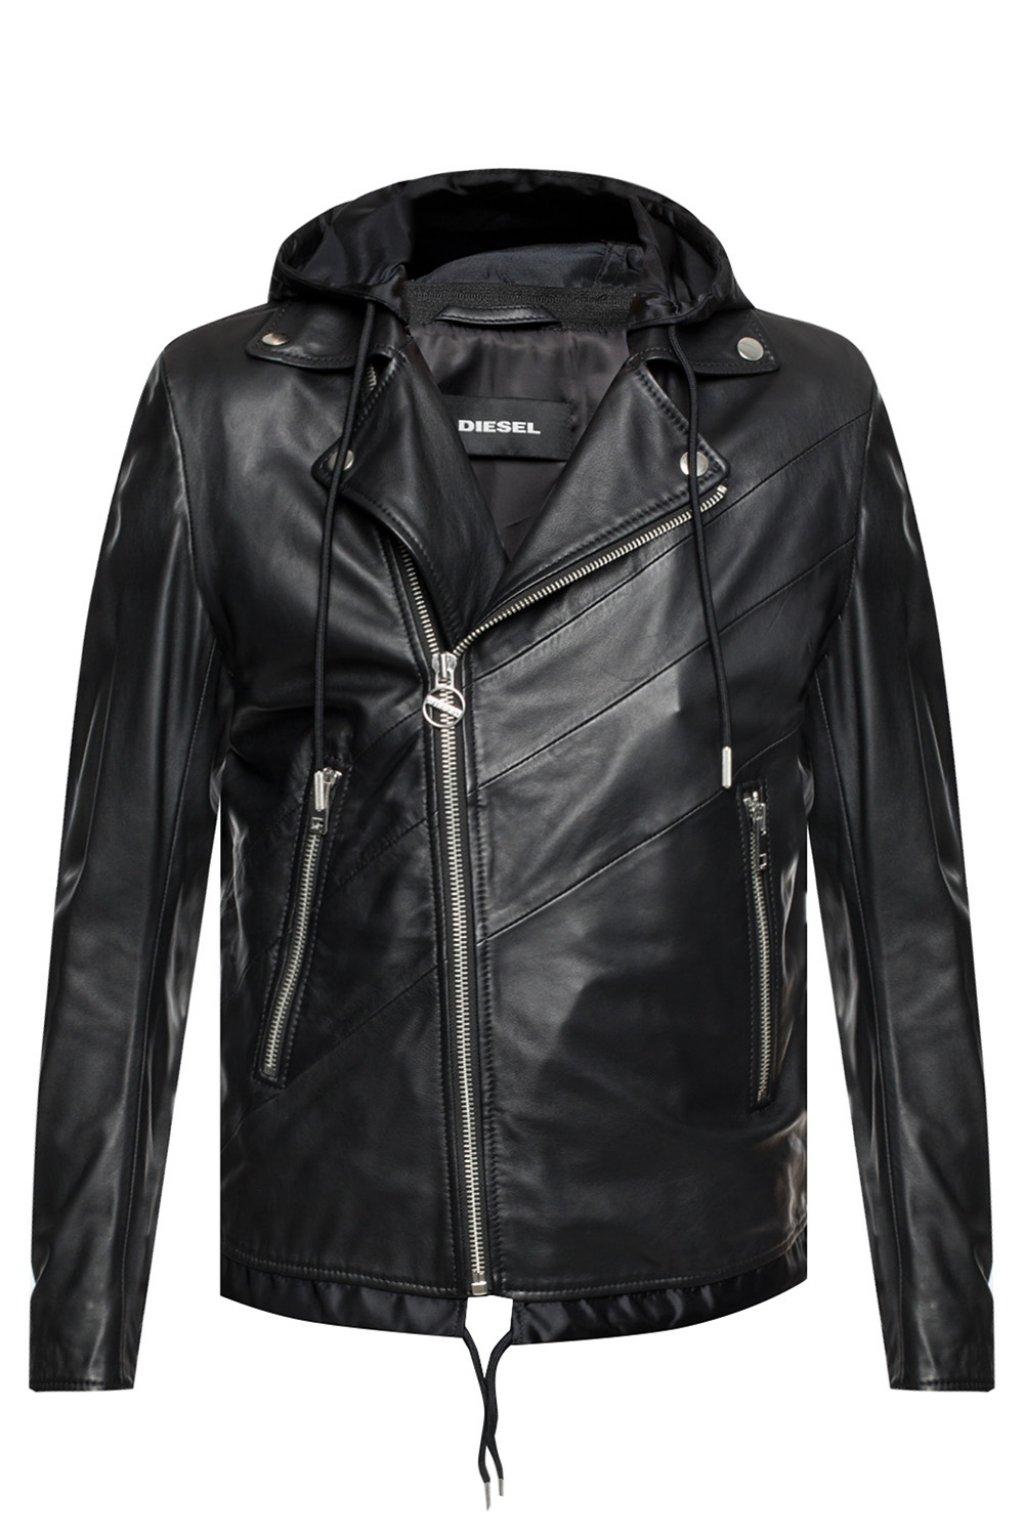 DIESEL Synthetic Biker Jacket Black for Men - Lyst